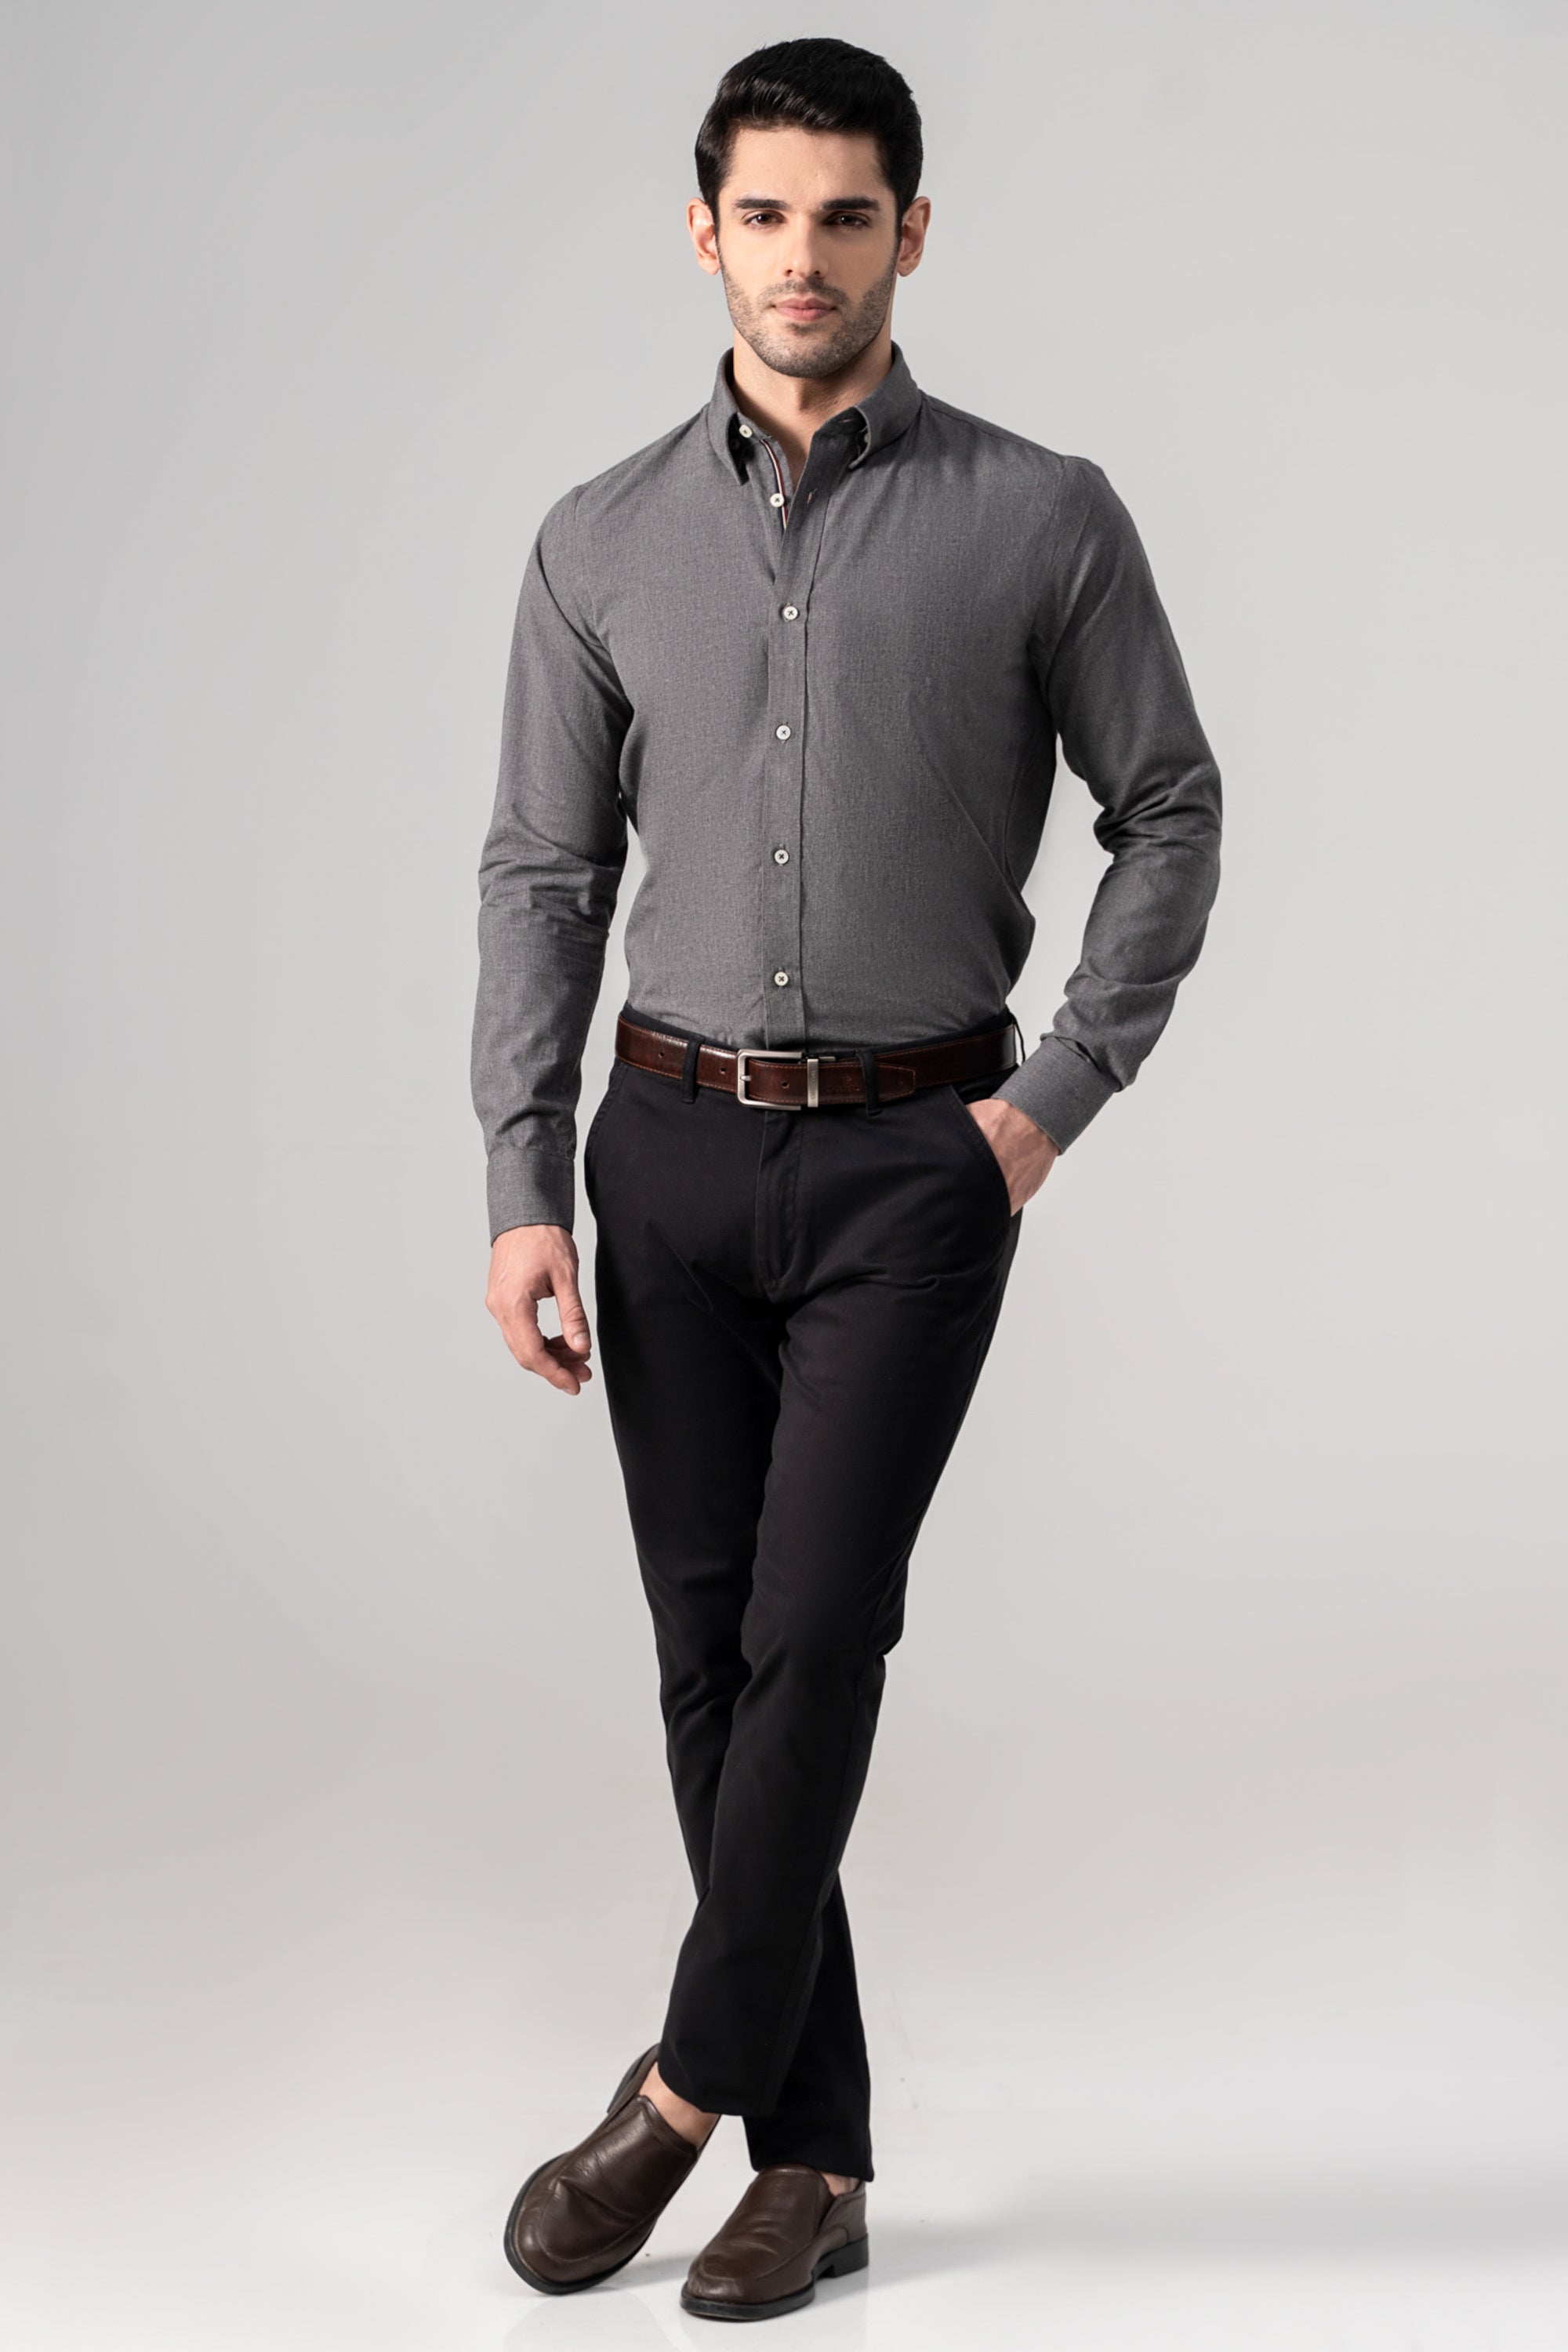 Men's Light Blue Dress Shirt, Grey Dress Pants, Black Woven Leather Belt,  Grey Sunglasses | Lookastic